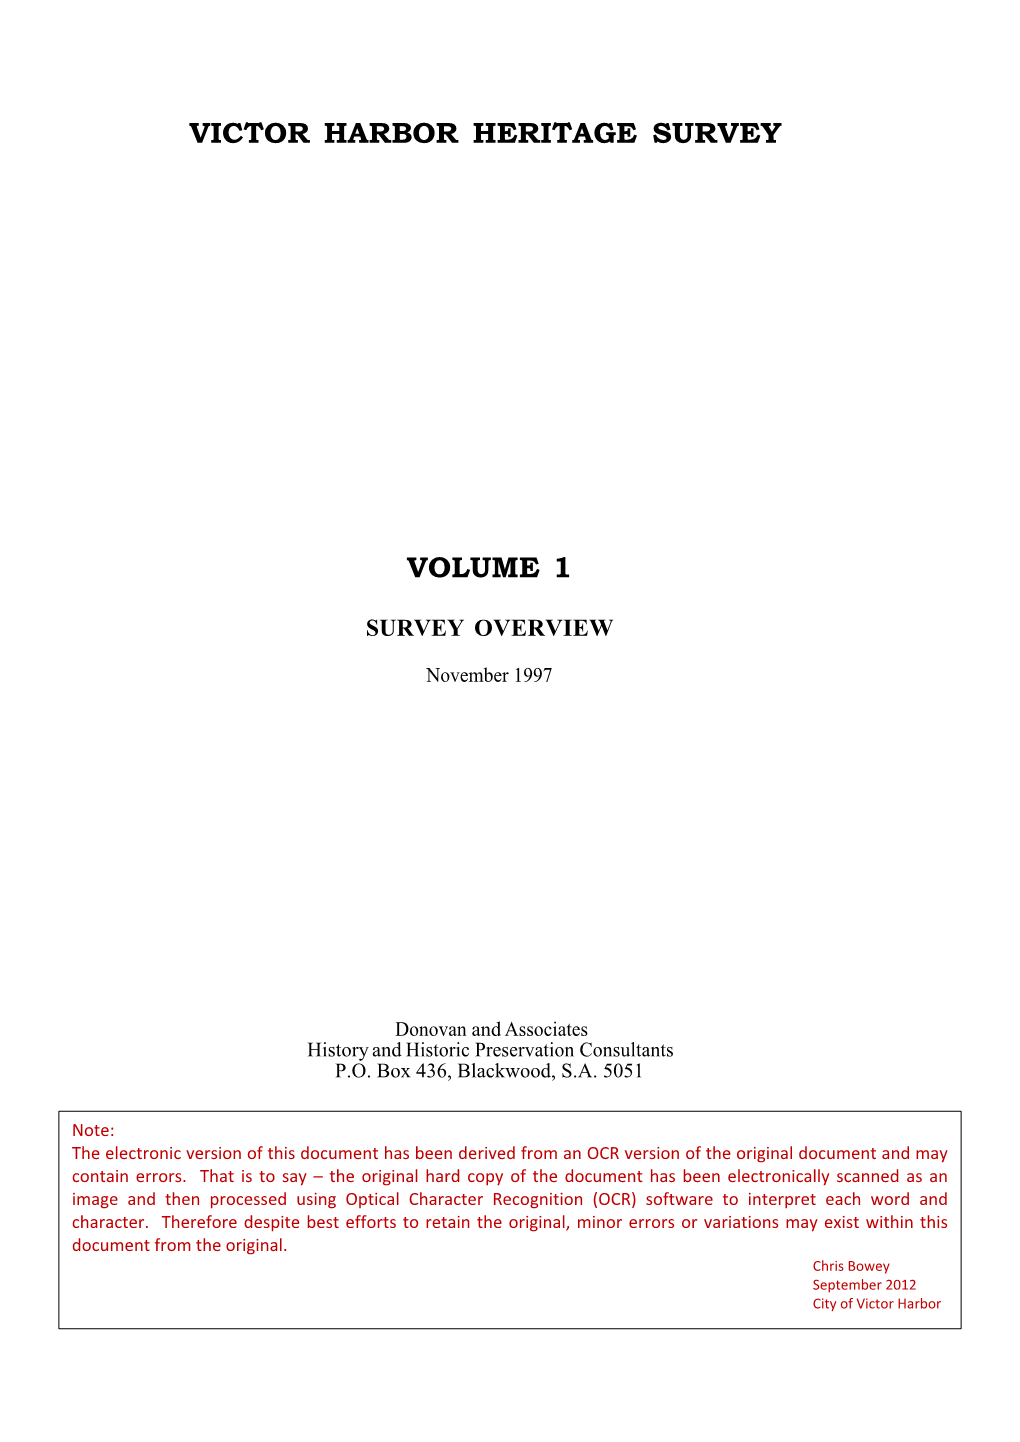 Victor Harbor Heritage Survey Volume 1